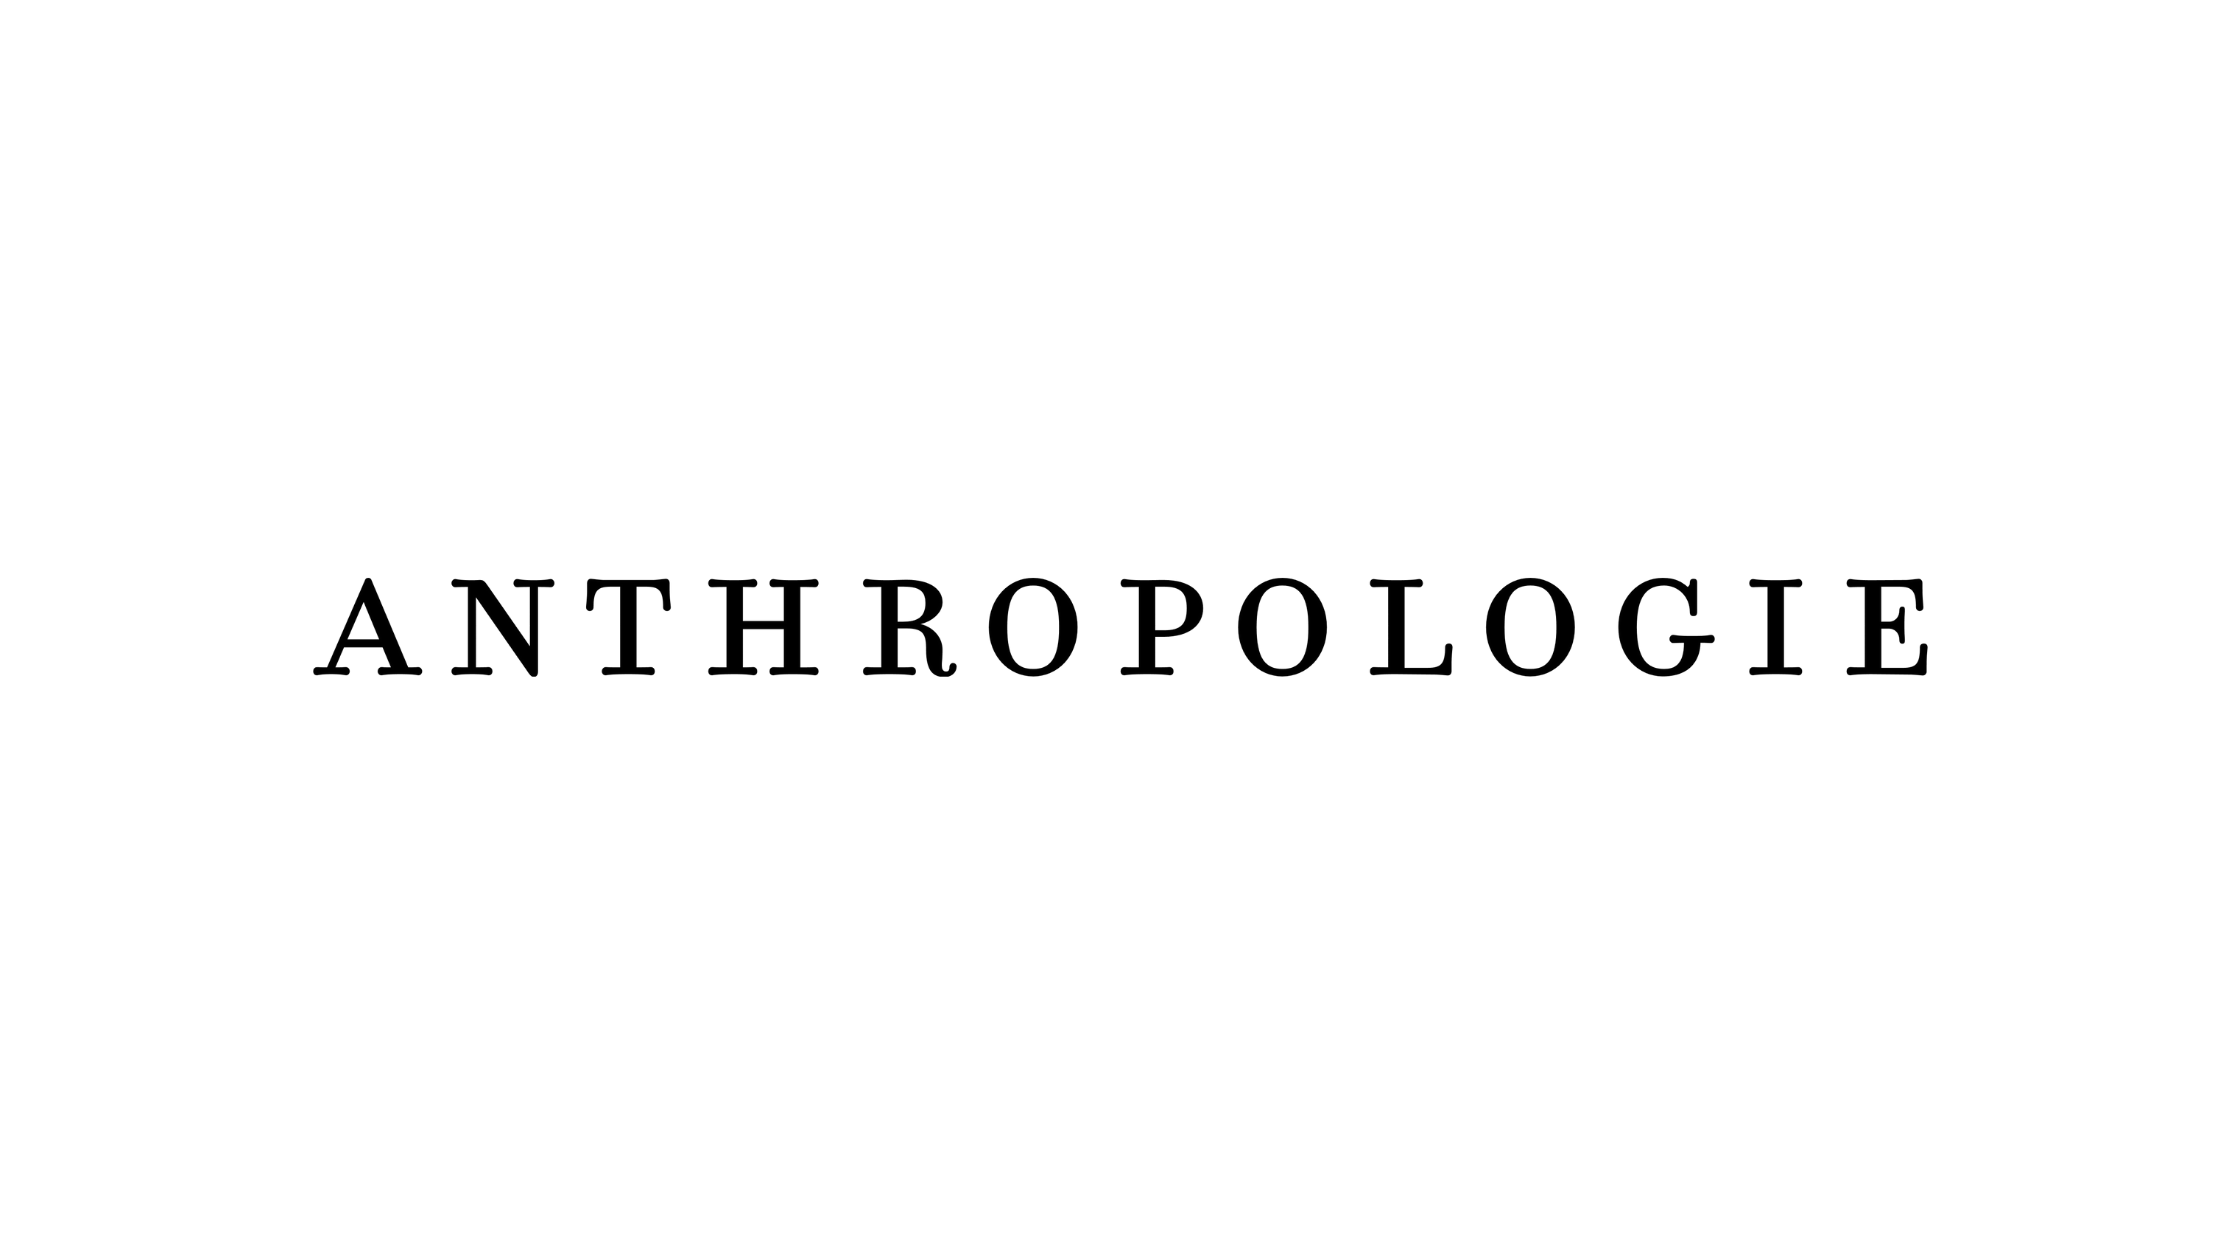 ANTHROPOLOGIE LOGO